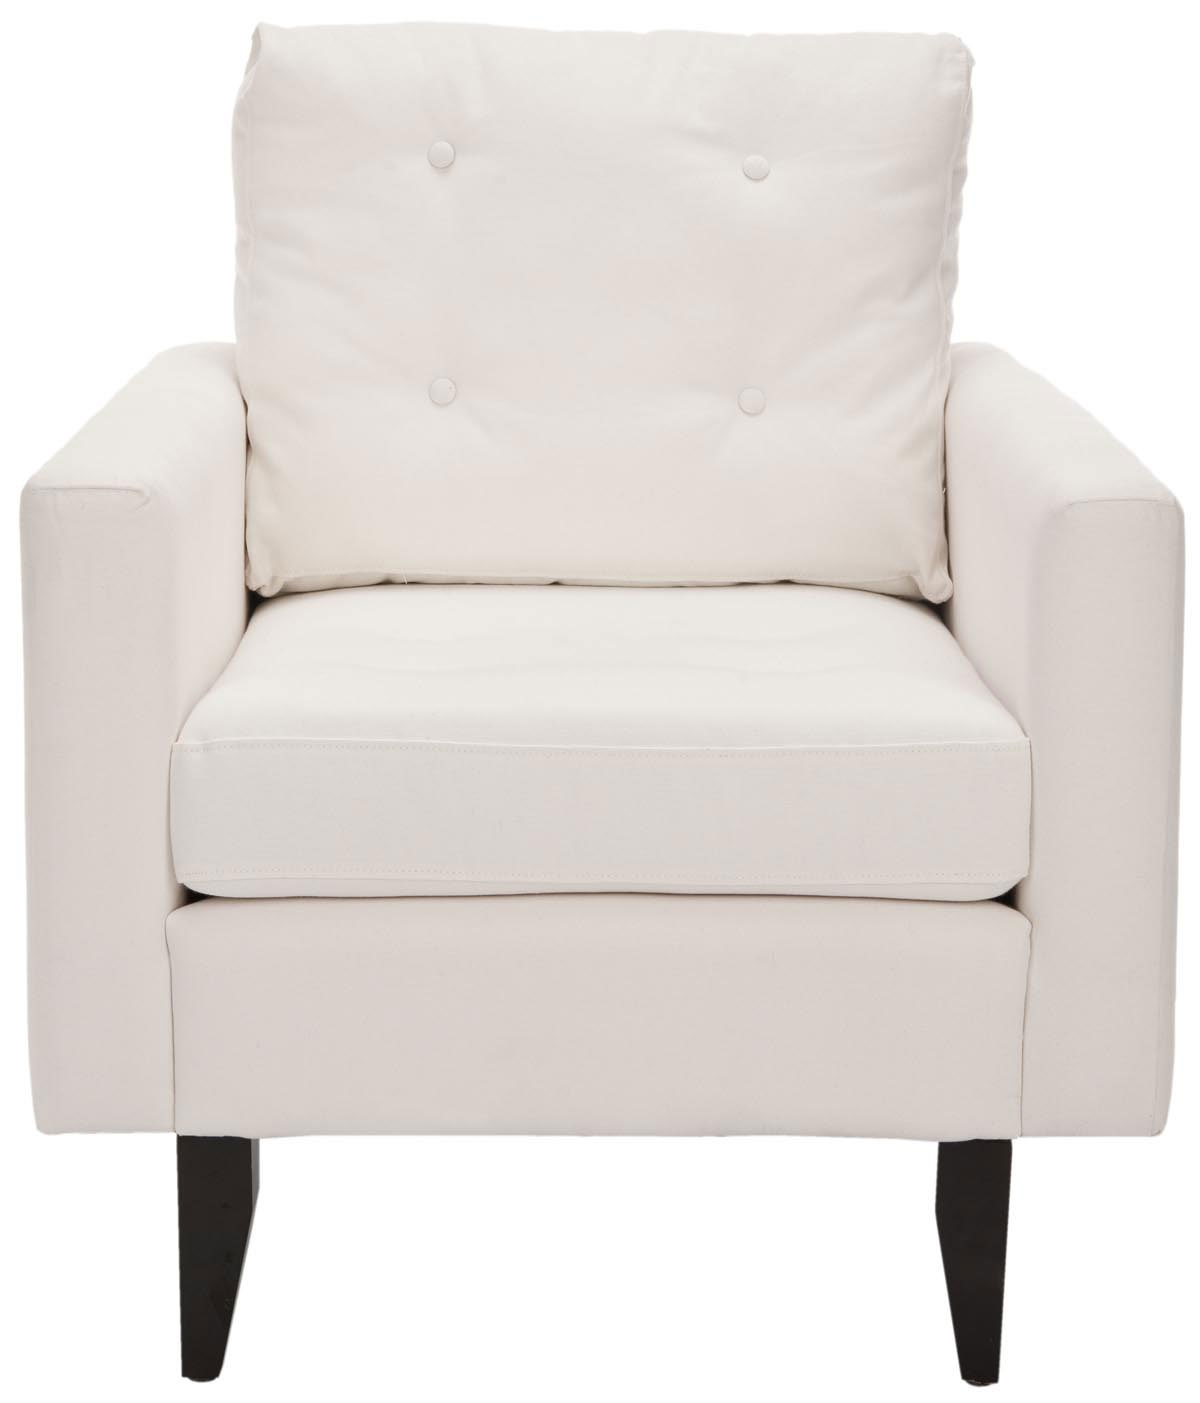 Mid Century Modern Caleb Club Chair - White/Java - Arlo Home - Image 0